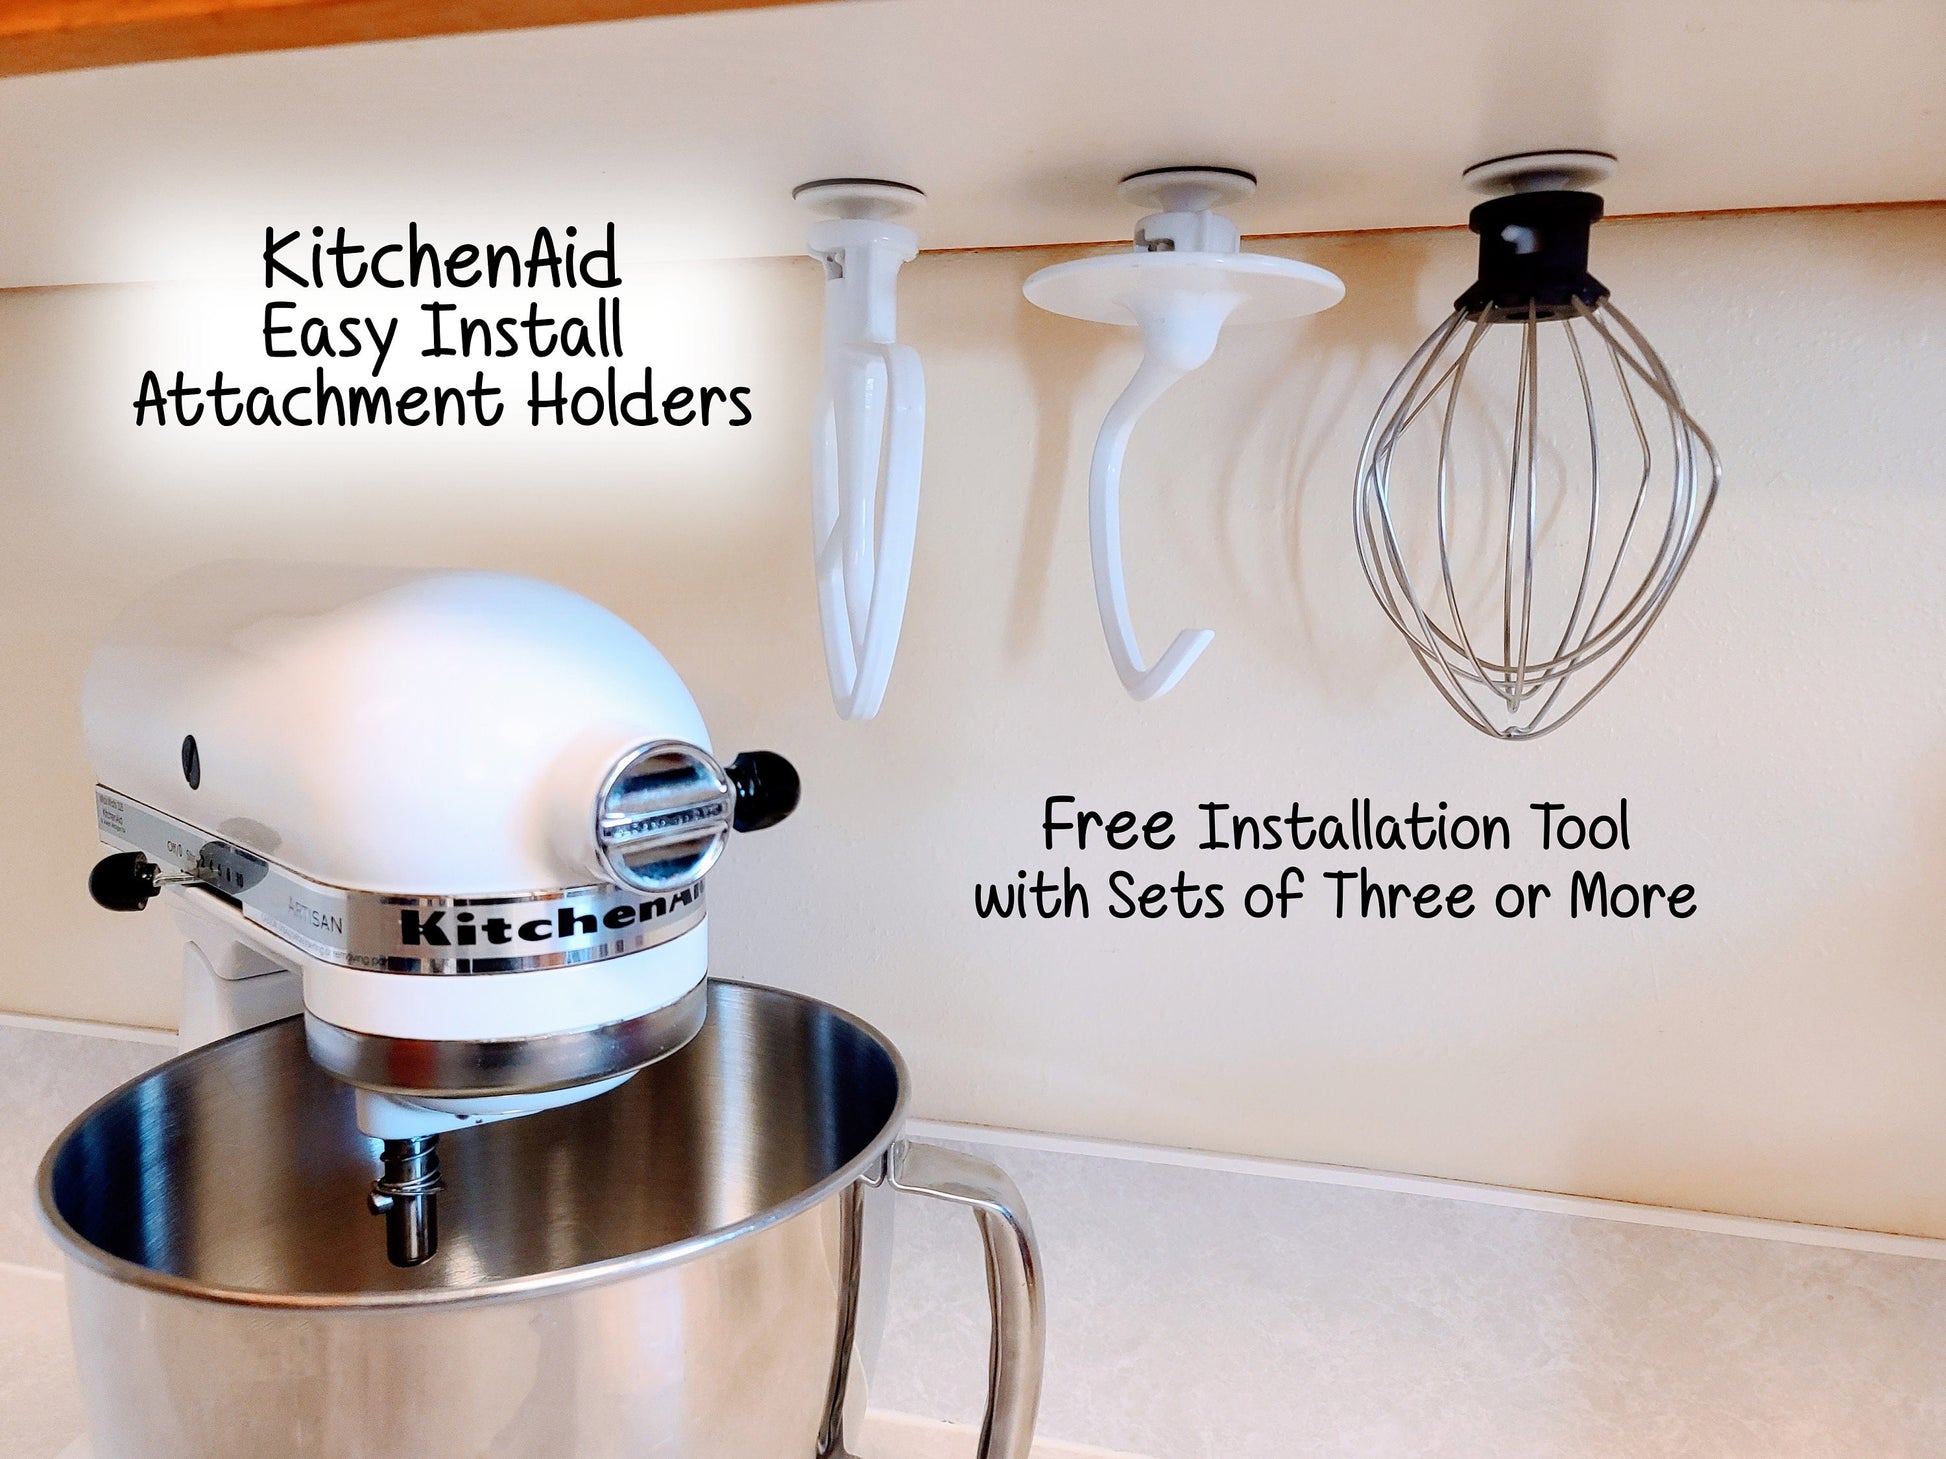 KitchenAid Mixer, Attachment Holder, Space Saver